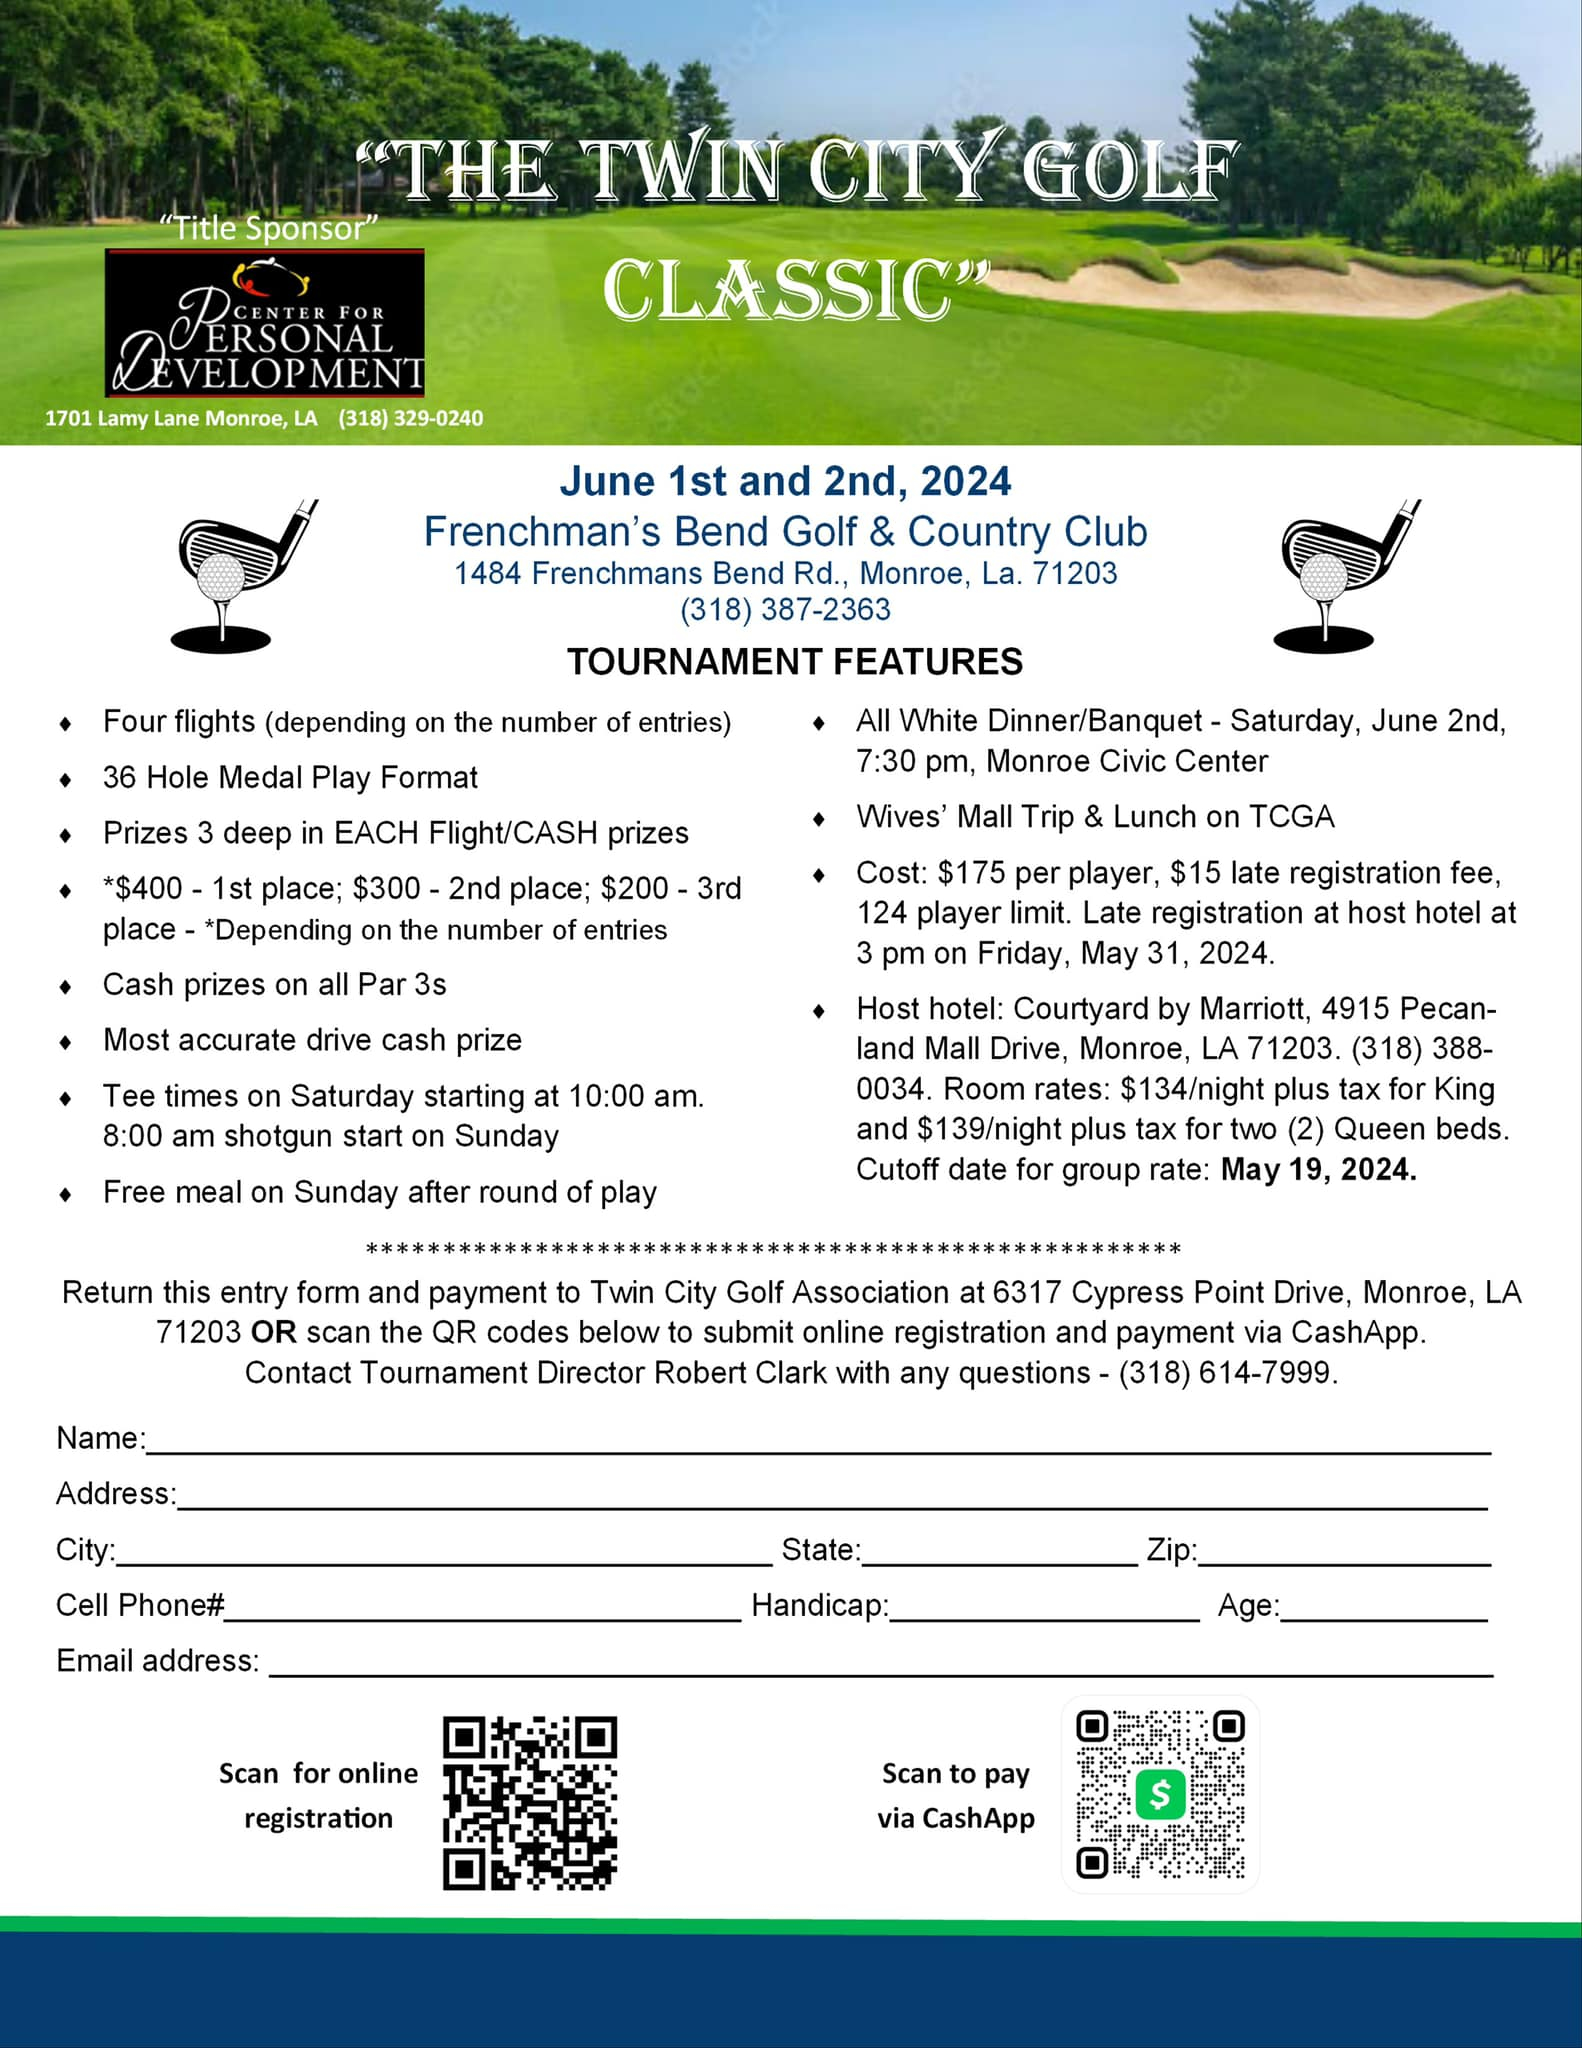 Registration Twin City Golf Association